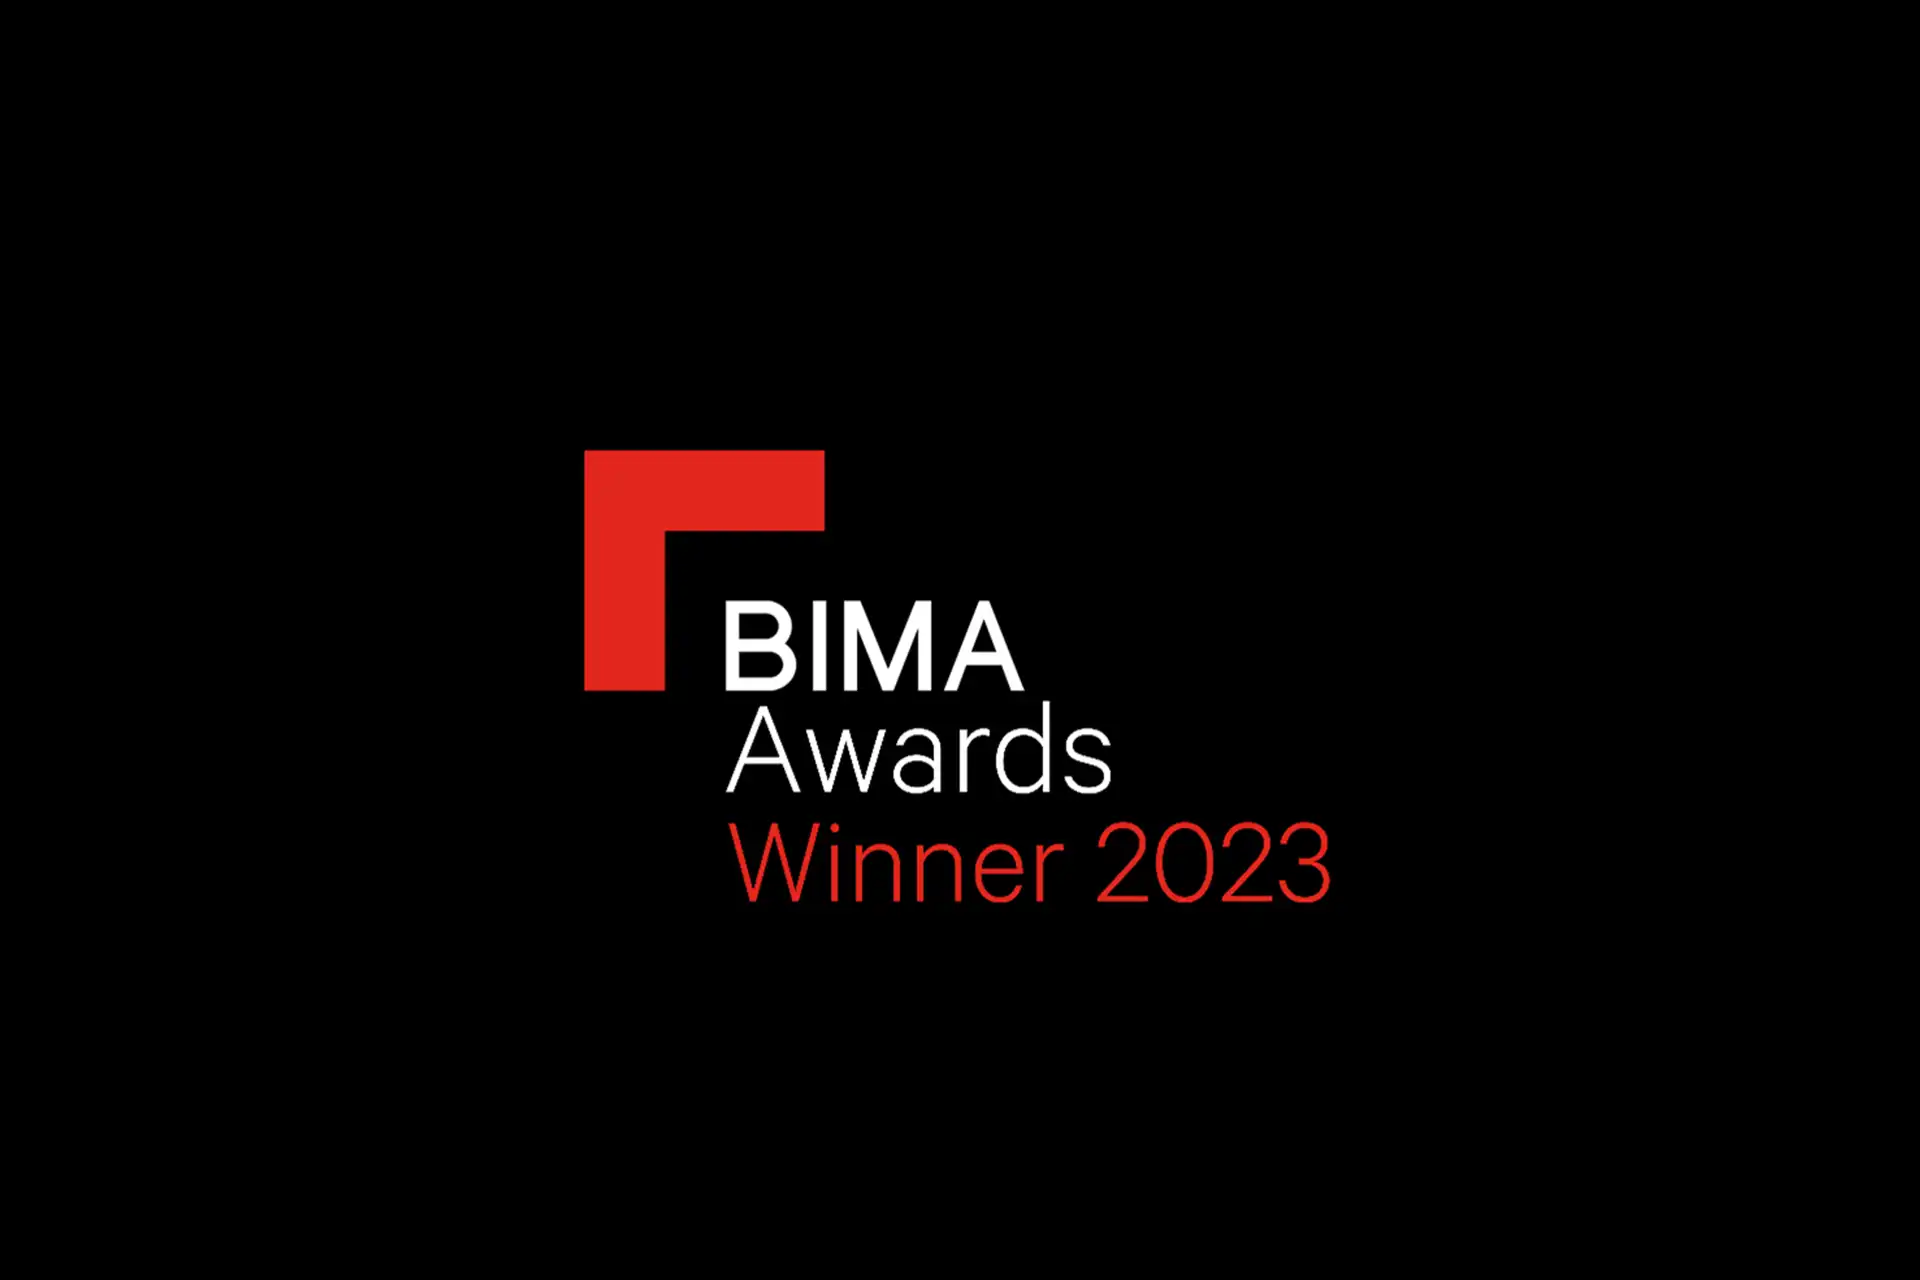 bima awards winner 2023